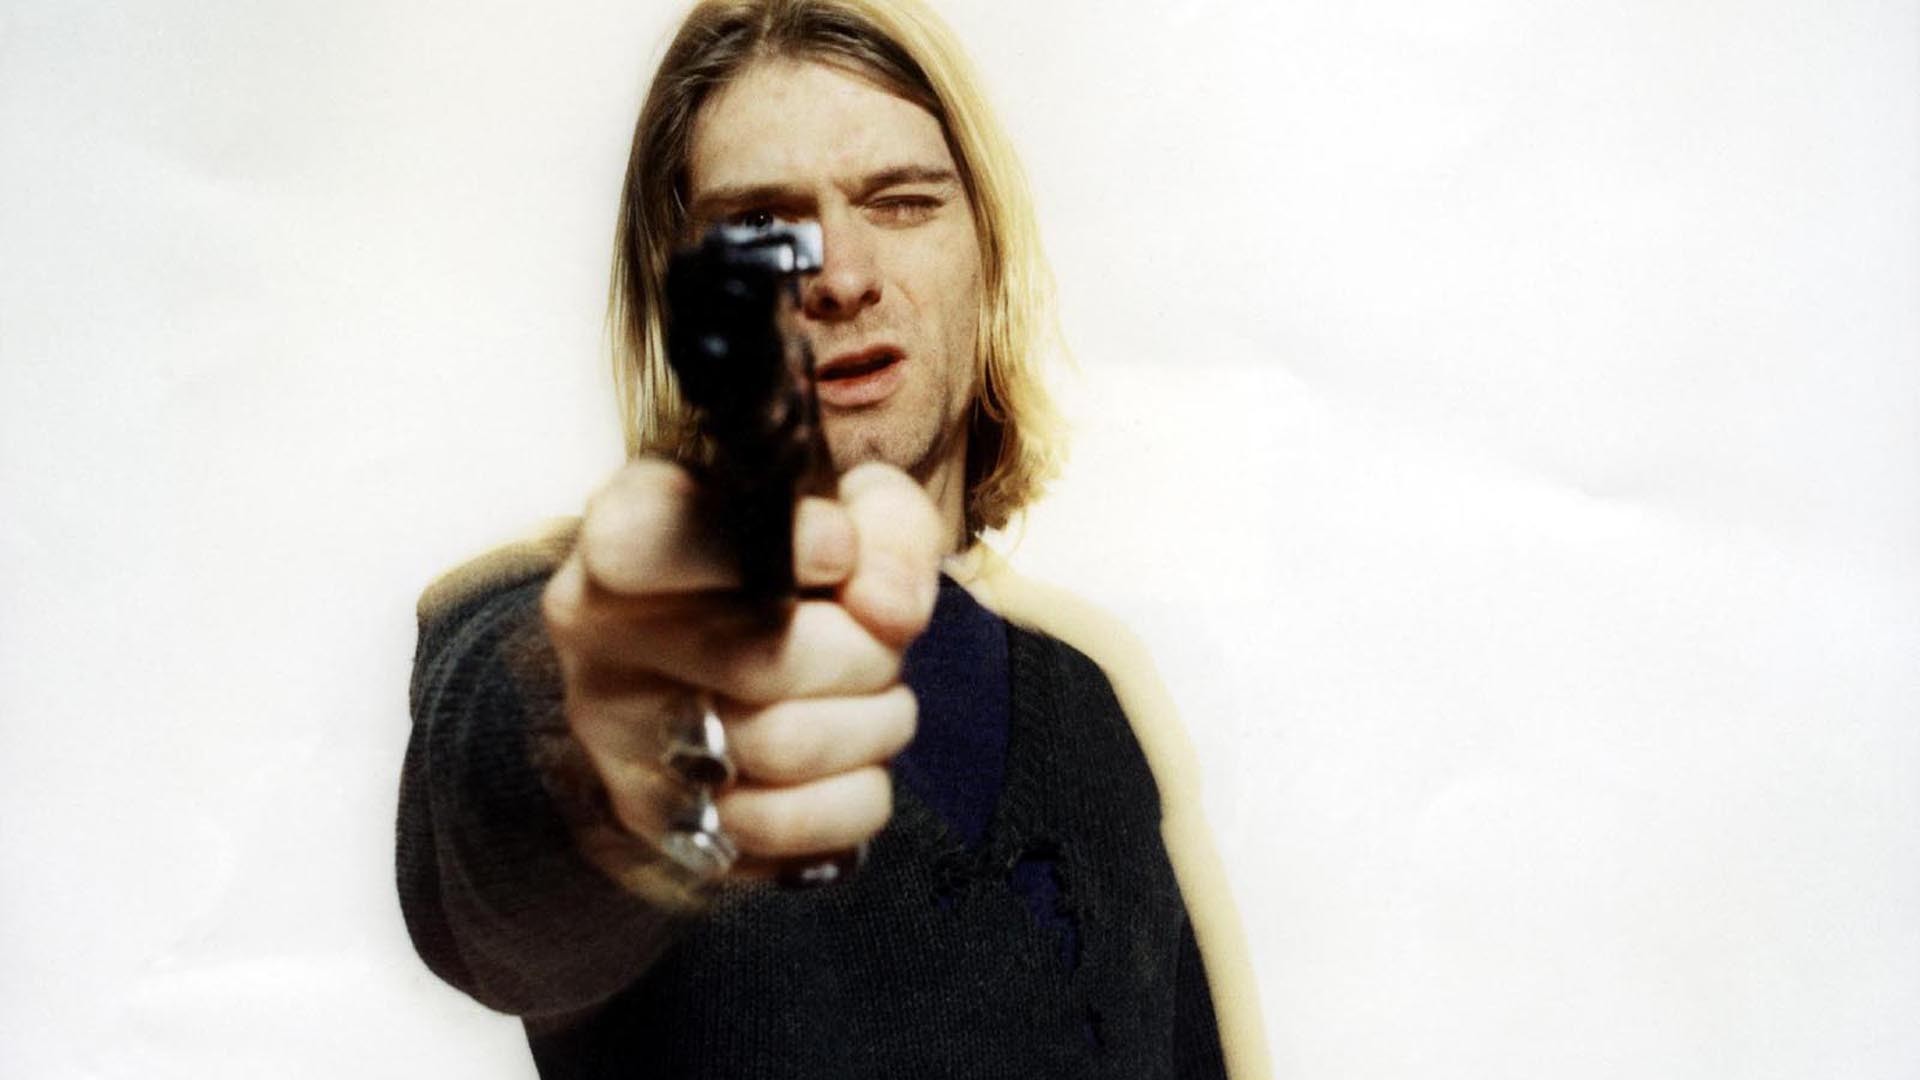 People 1920x1080 Kurt Cobain musician gun men singer celebrity at gunpoint aiming weapon men indoors studio simple background white background looking at viewer deceased